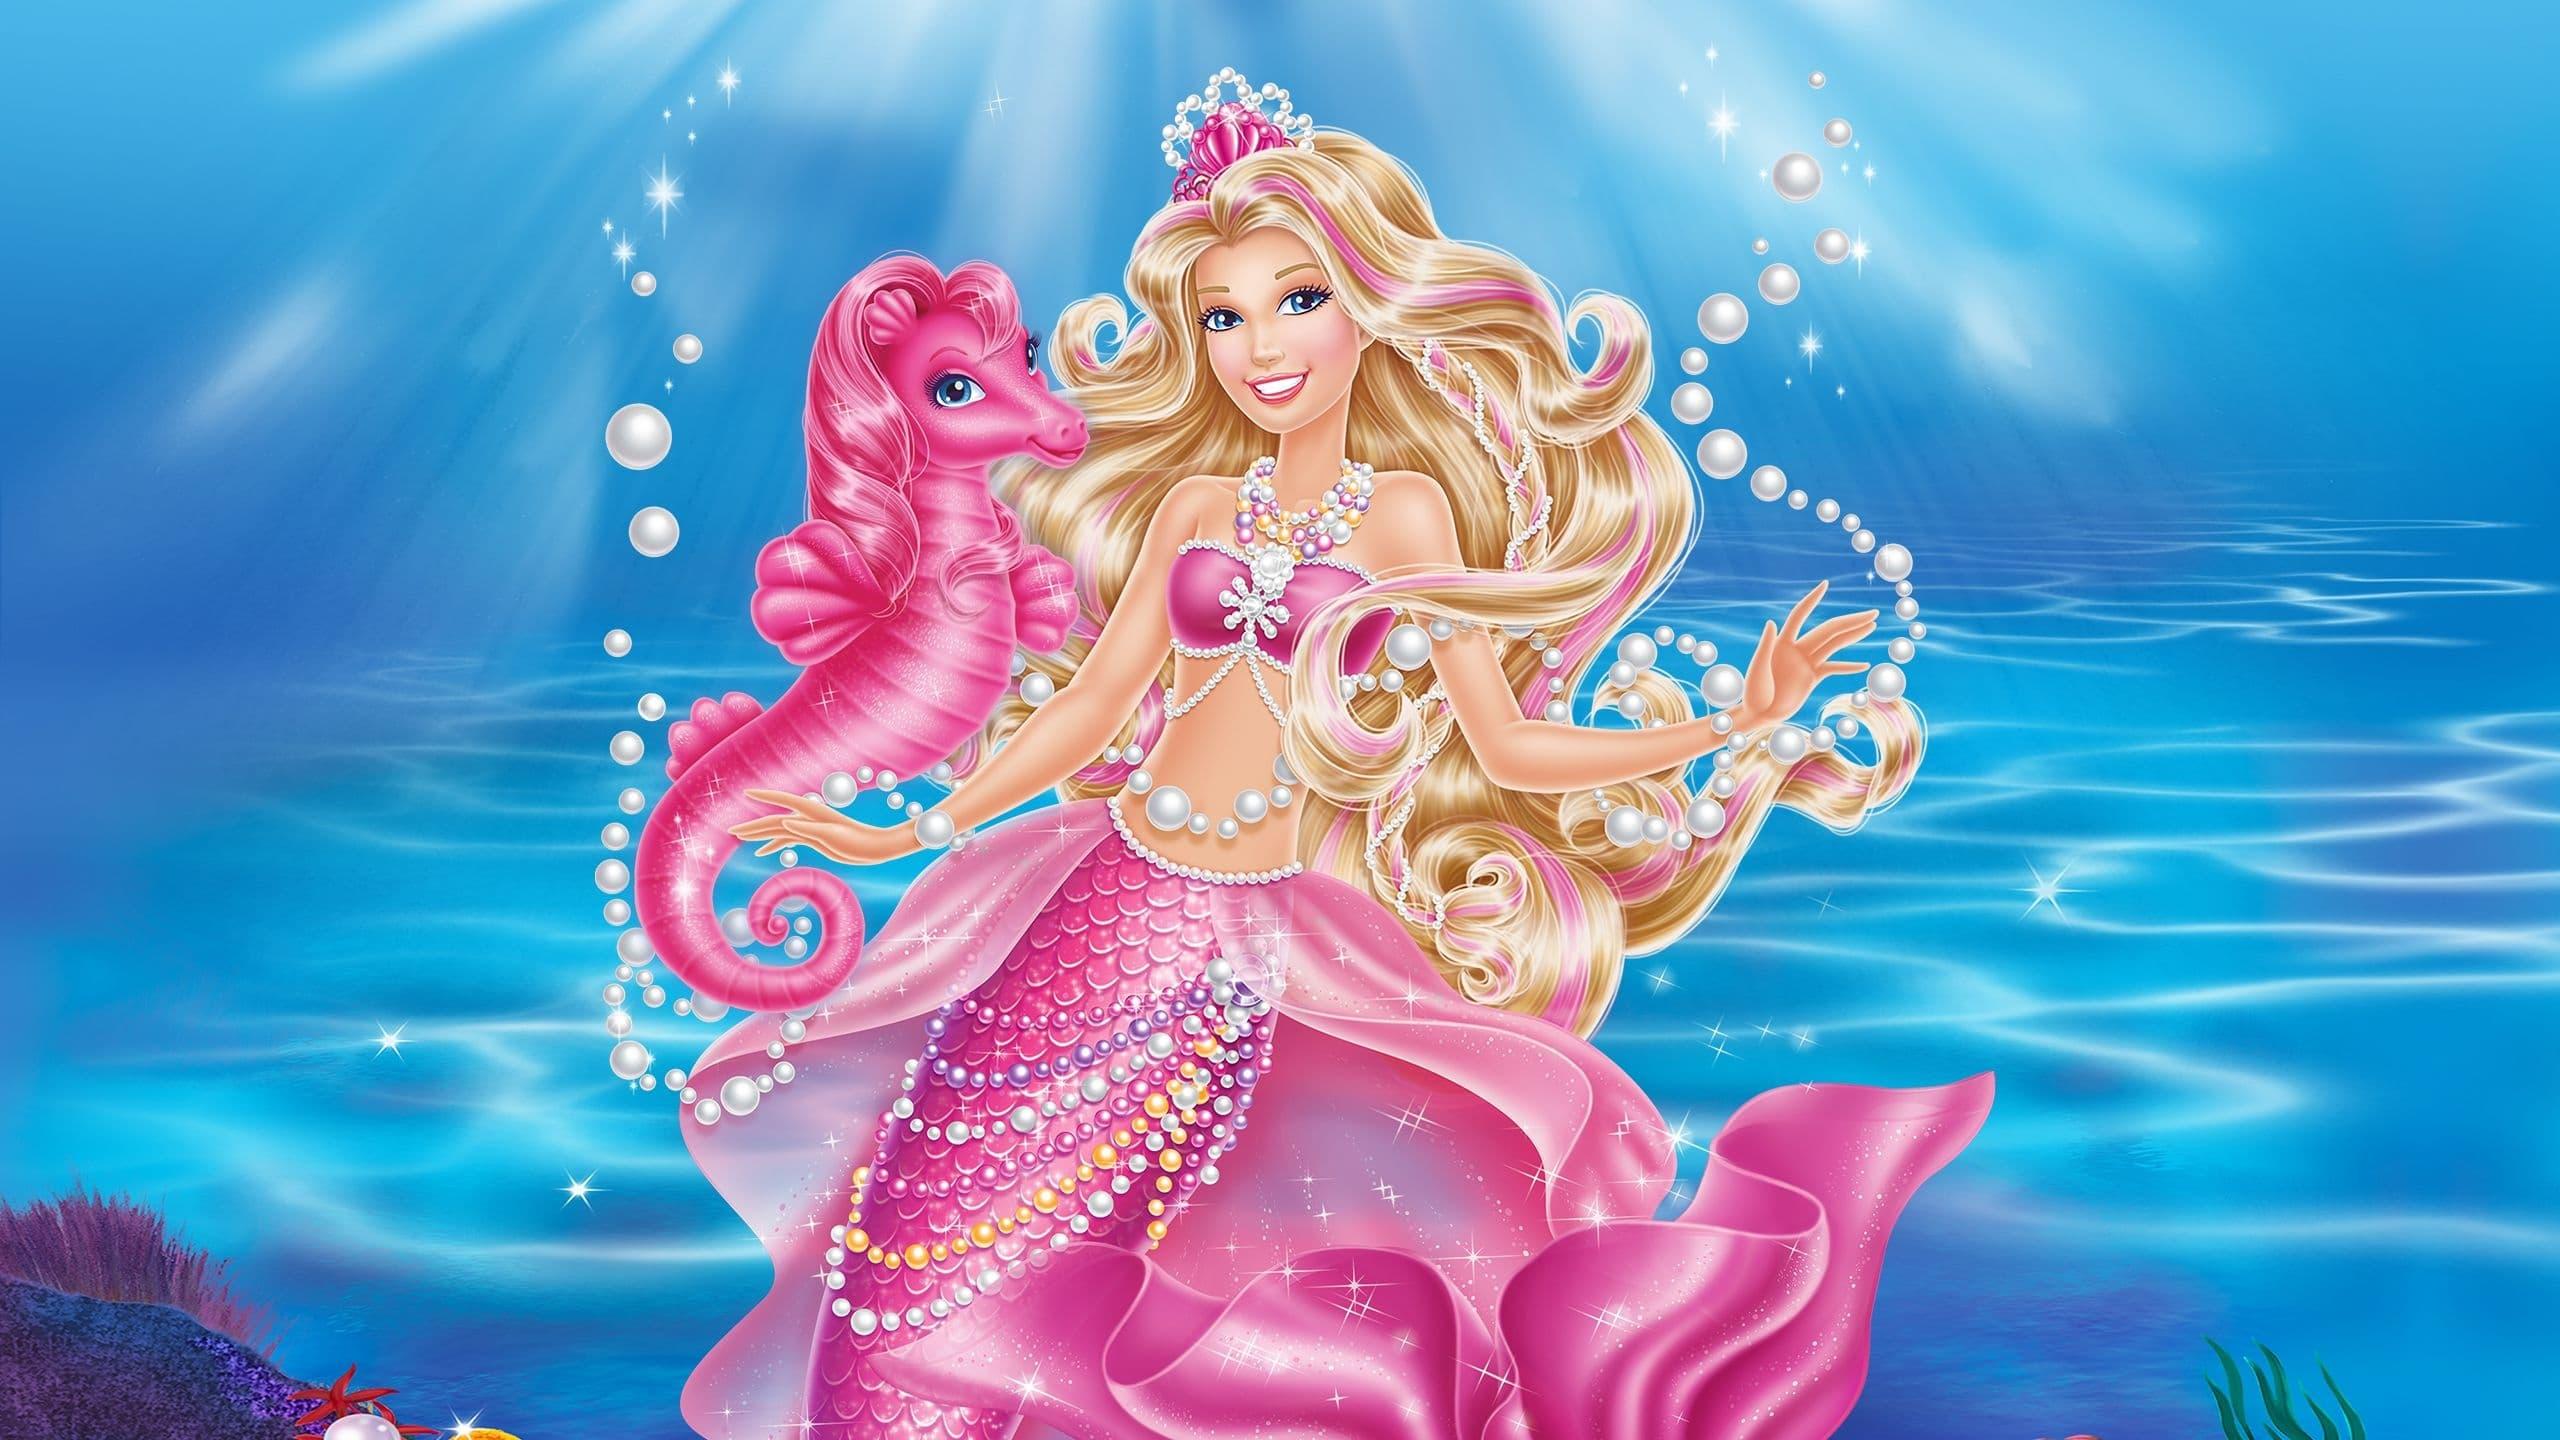 Barbie: The Pearl Princess backdrop